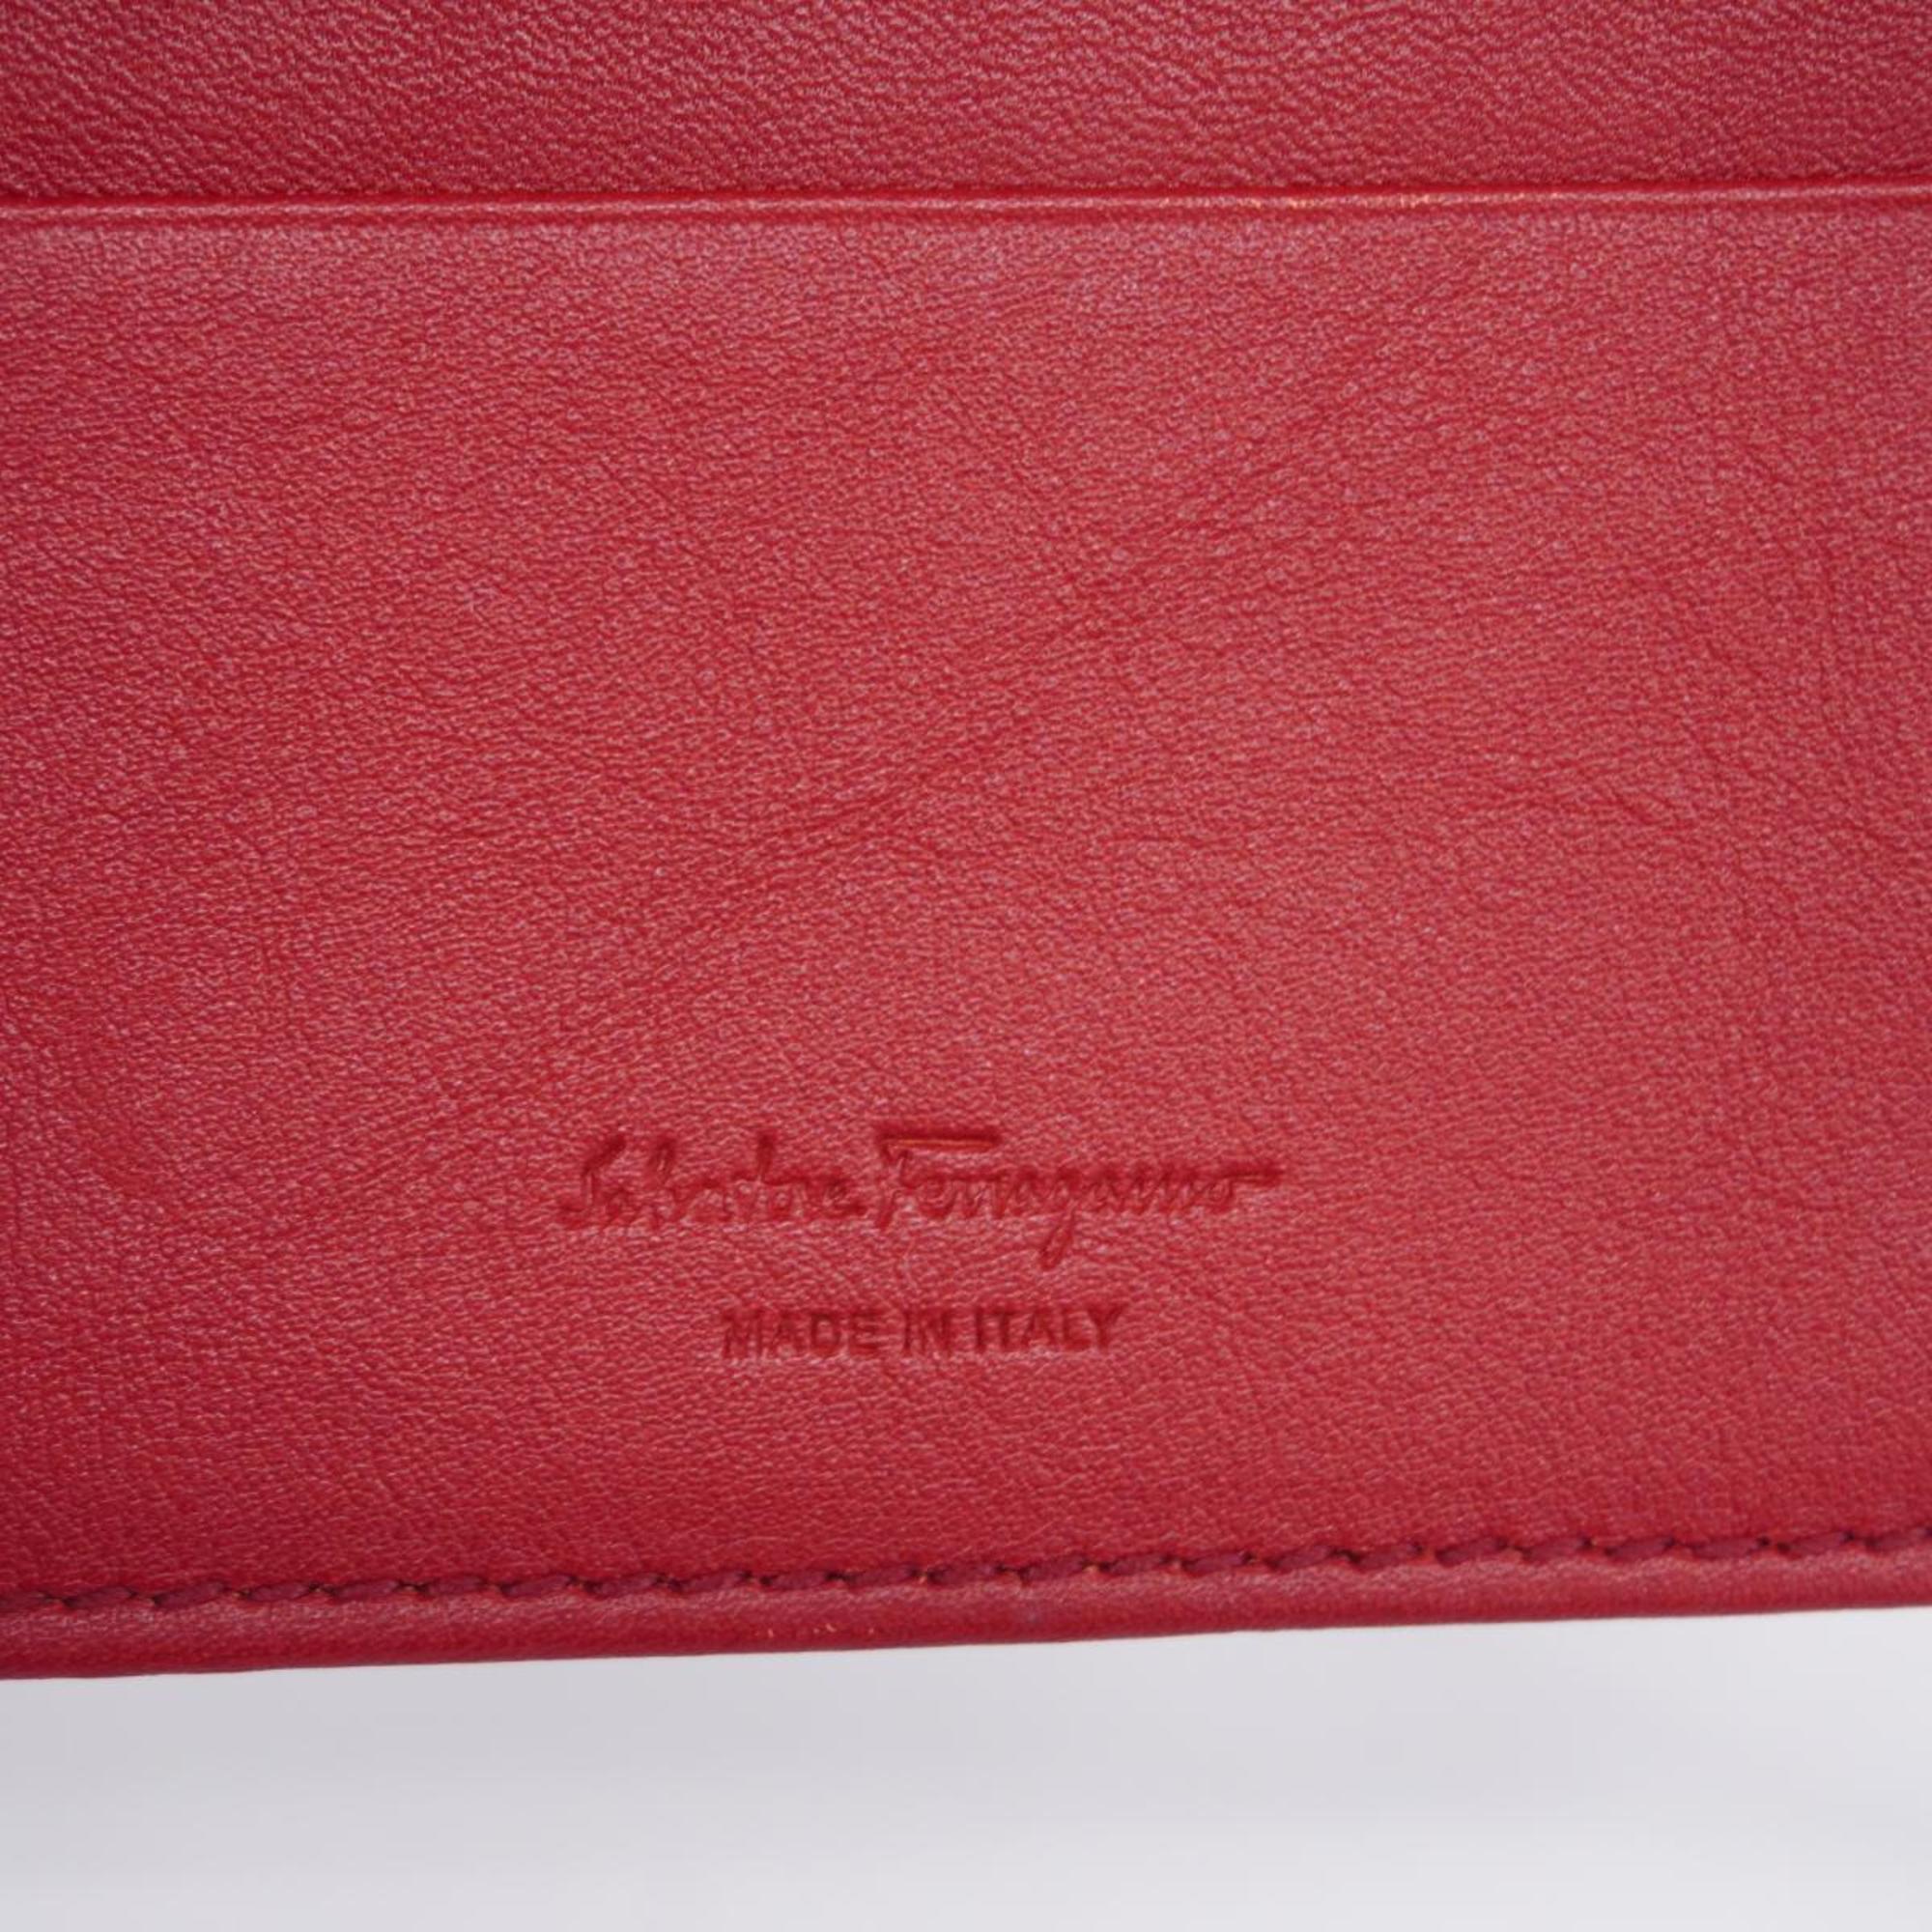 Salvatore Ferragamo Business Card Holder Gancini Leather Black Red Men's Women's